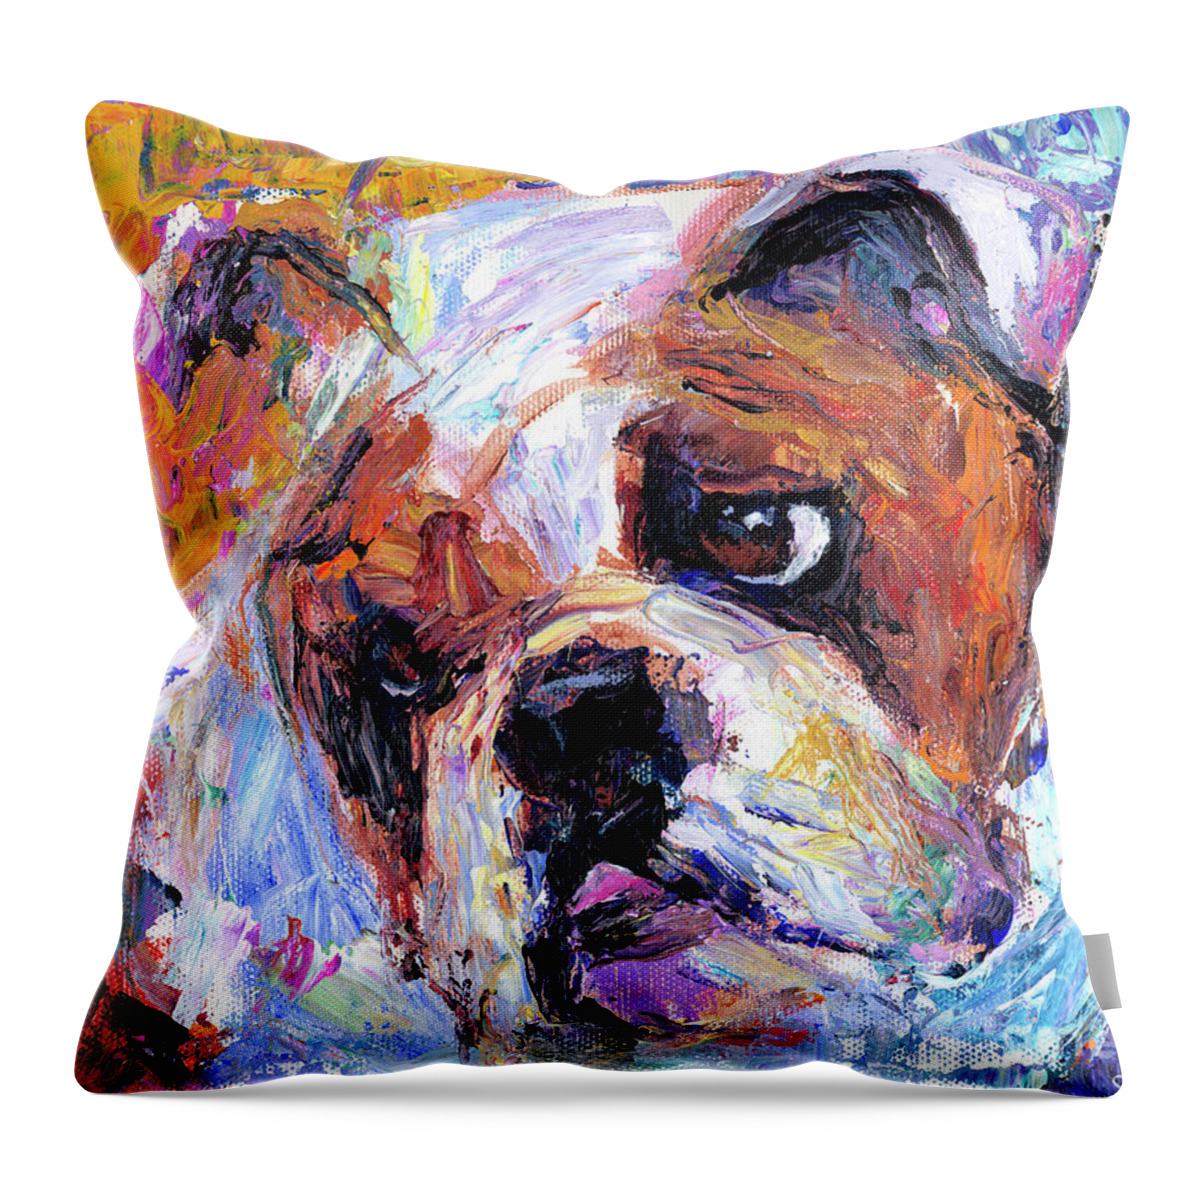 English Bulldog Painting Throw Pillow featuring the painting Impressionistic Bulldog painting #1 by Svetlana Novikova